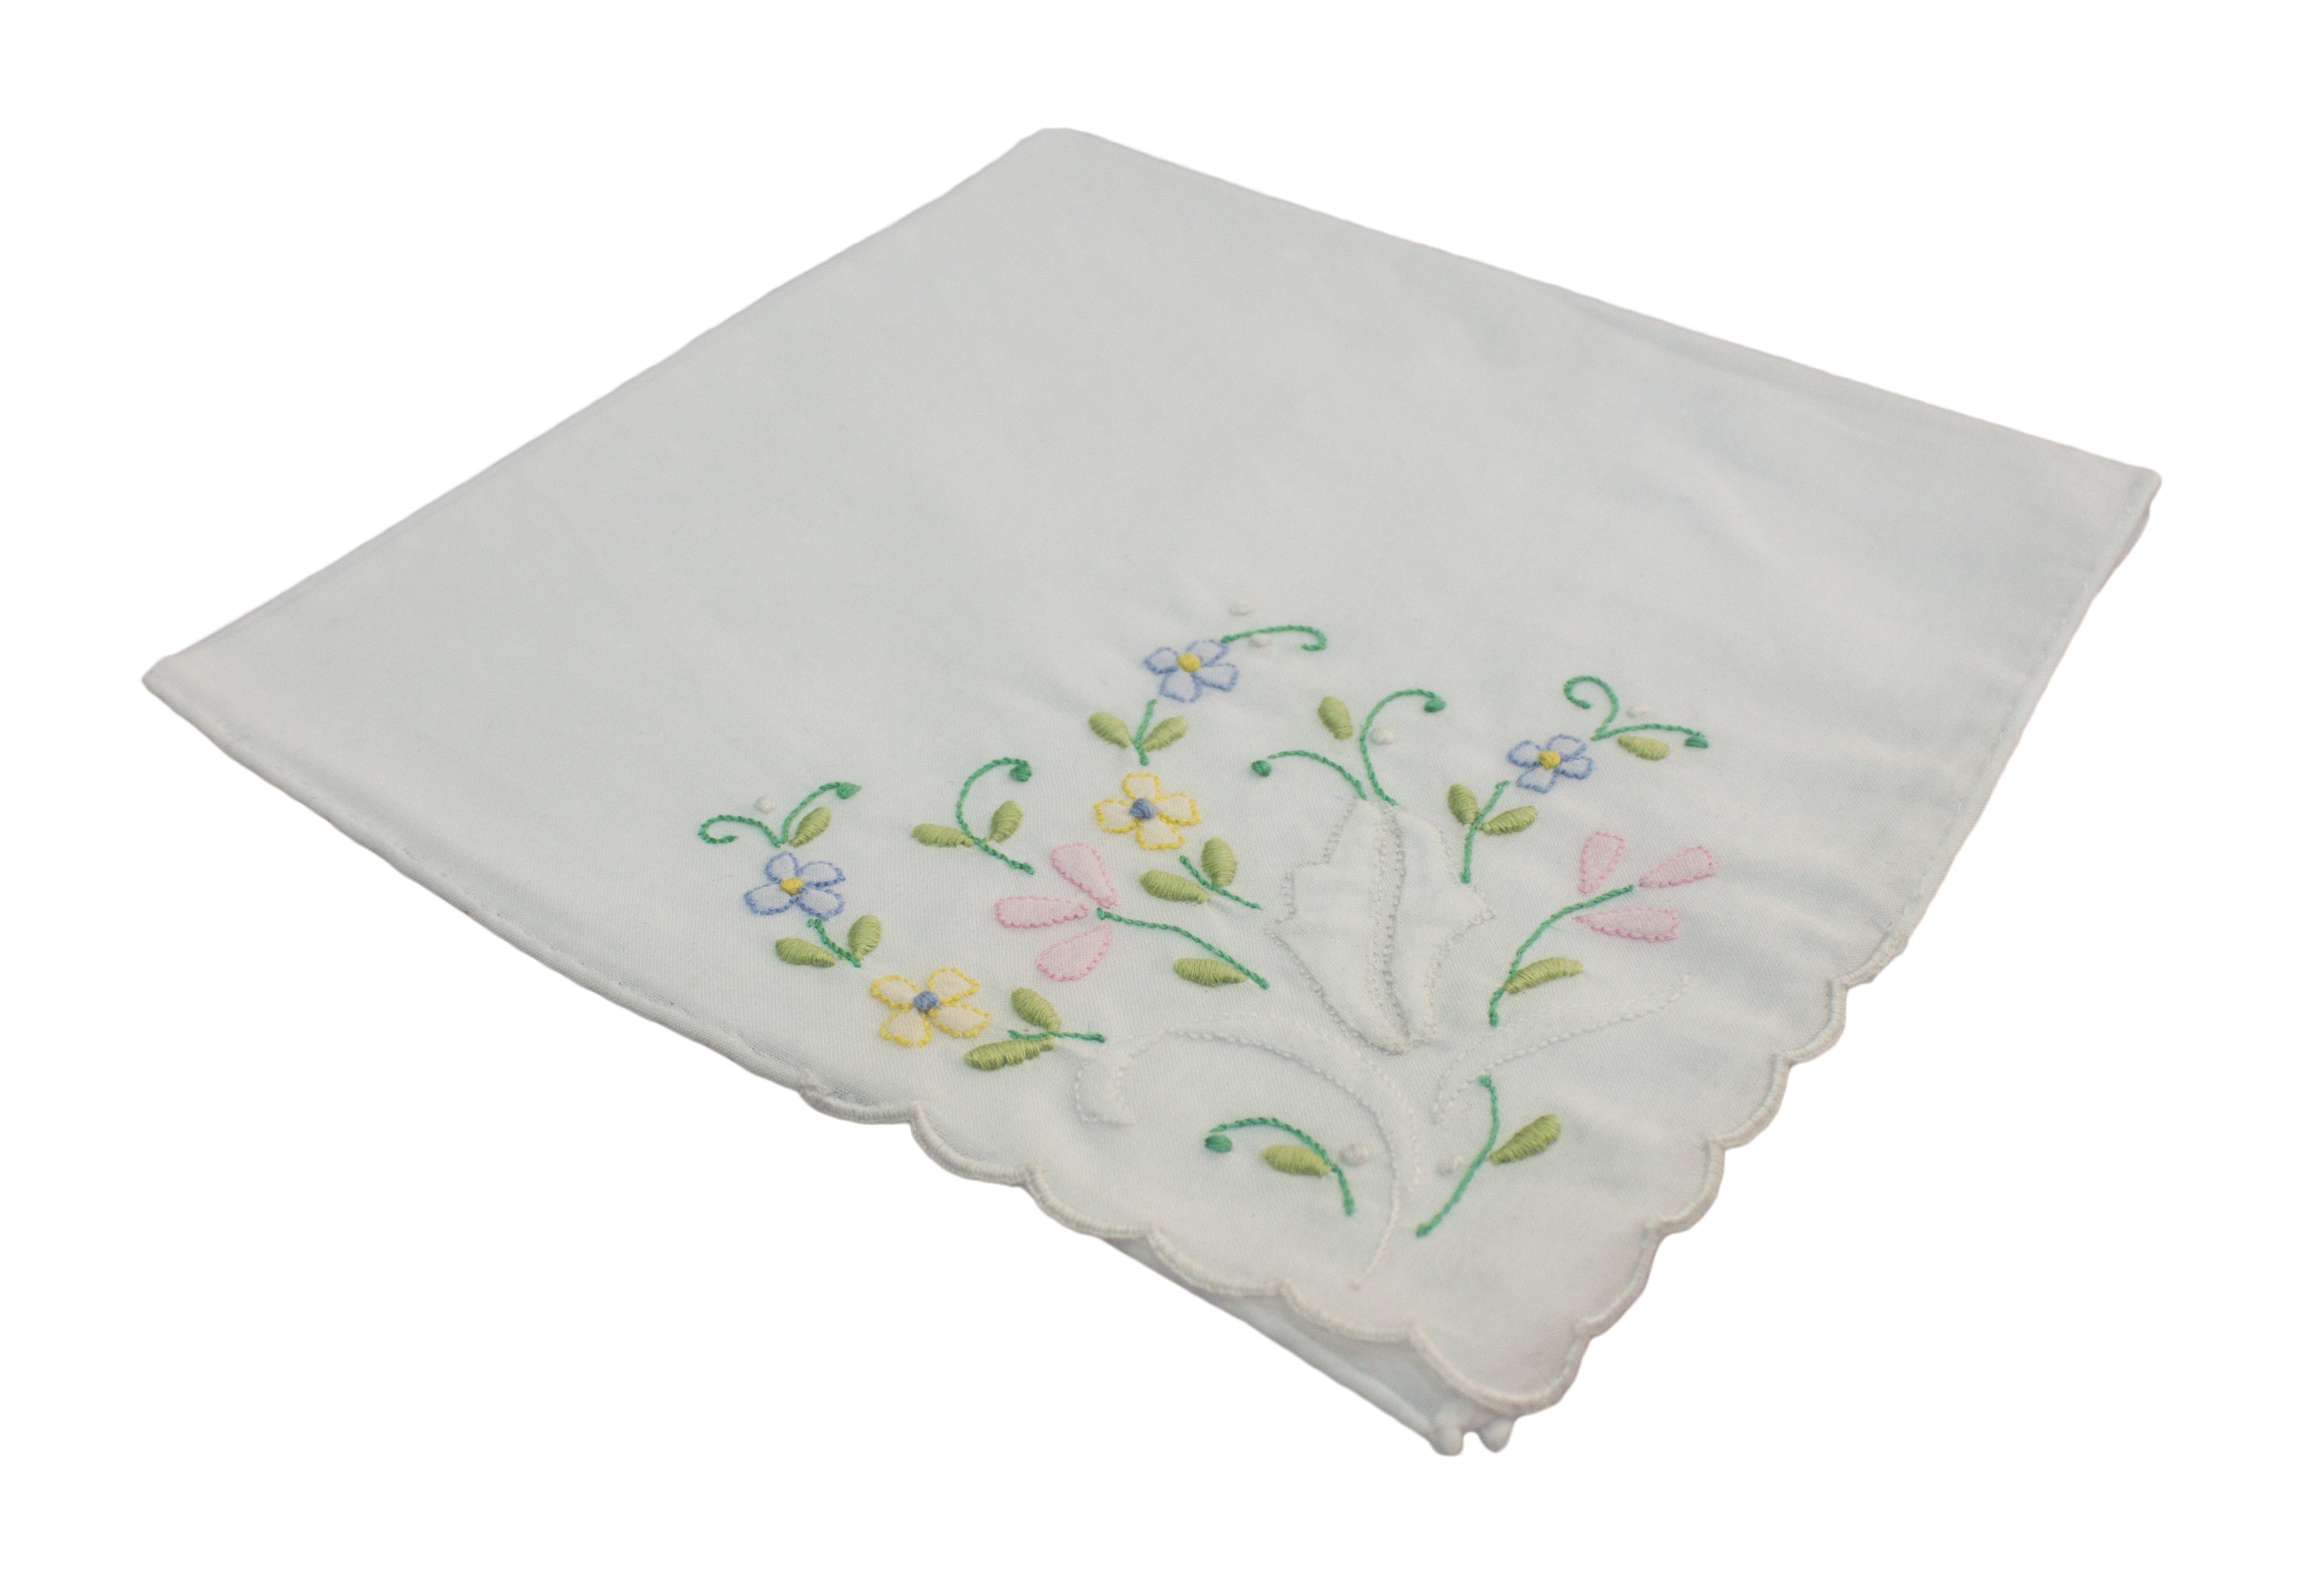 Handmade Madeira embroidery handkerchief